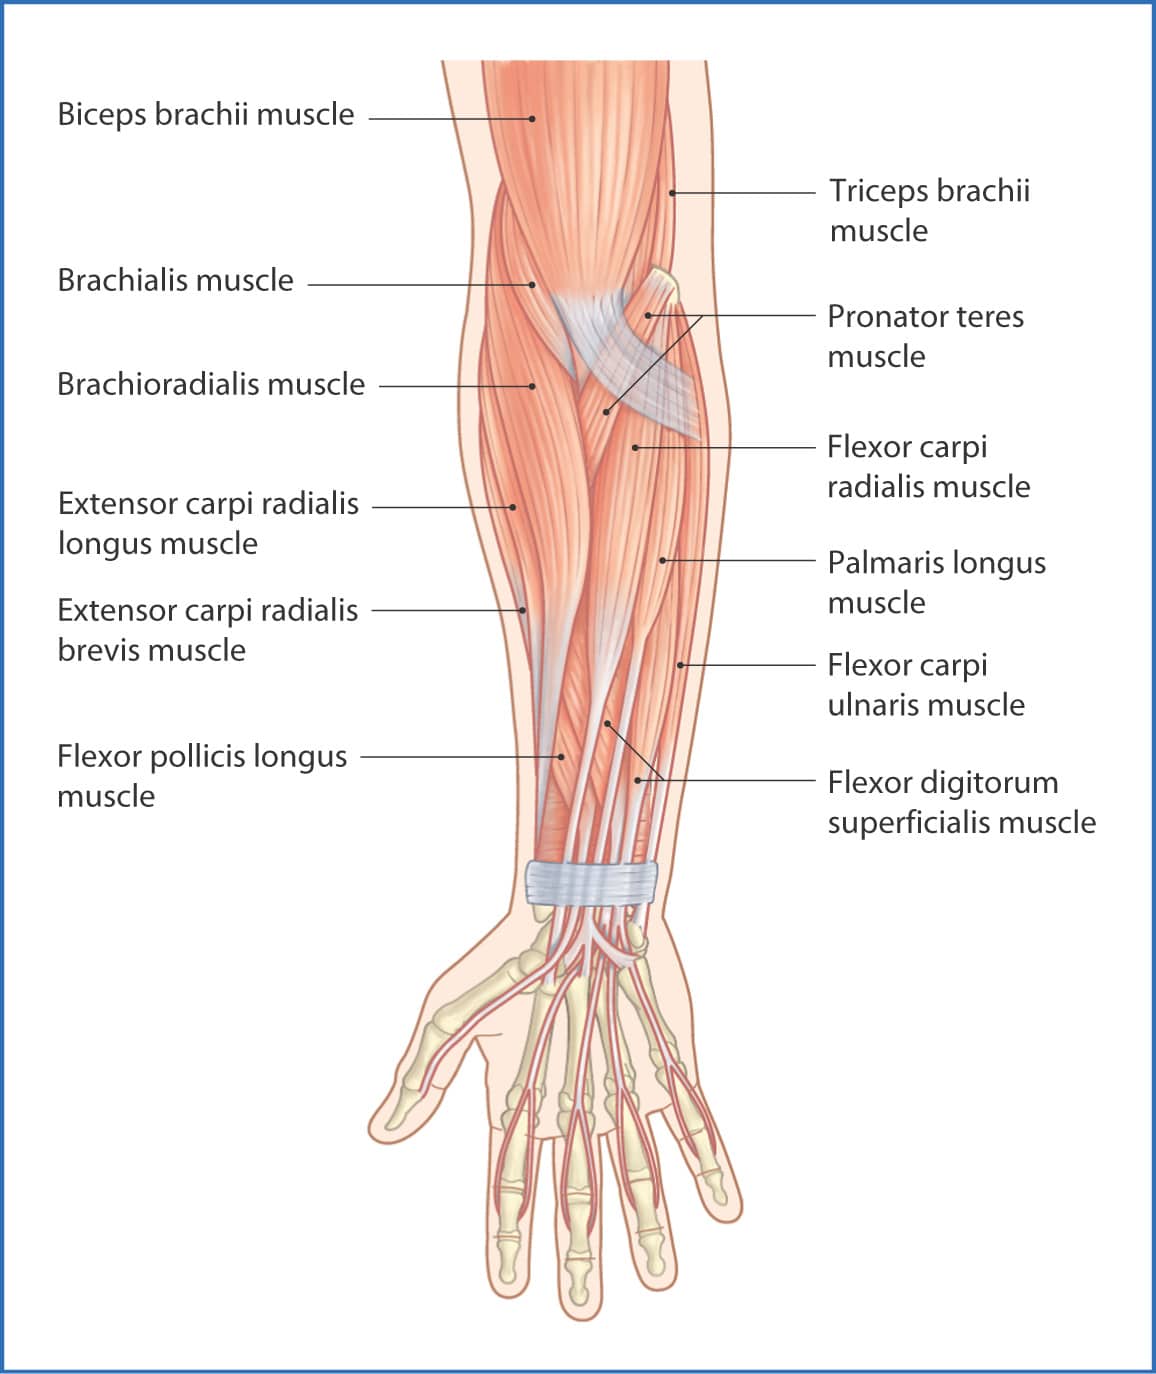 Muscle Anatomy of the Forearm Flexors